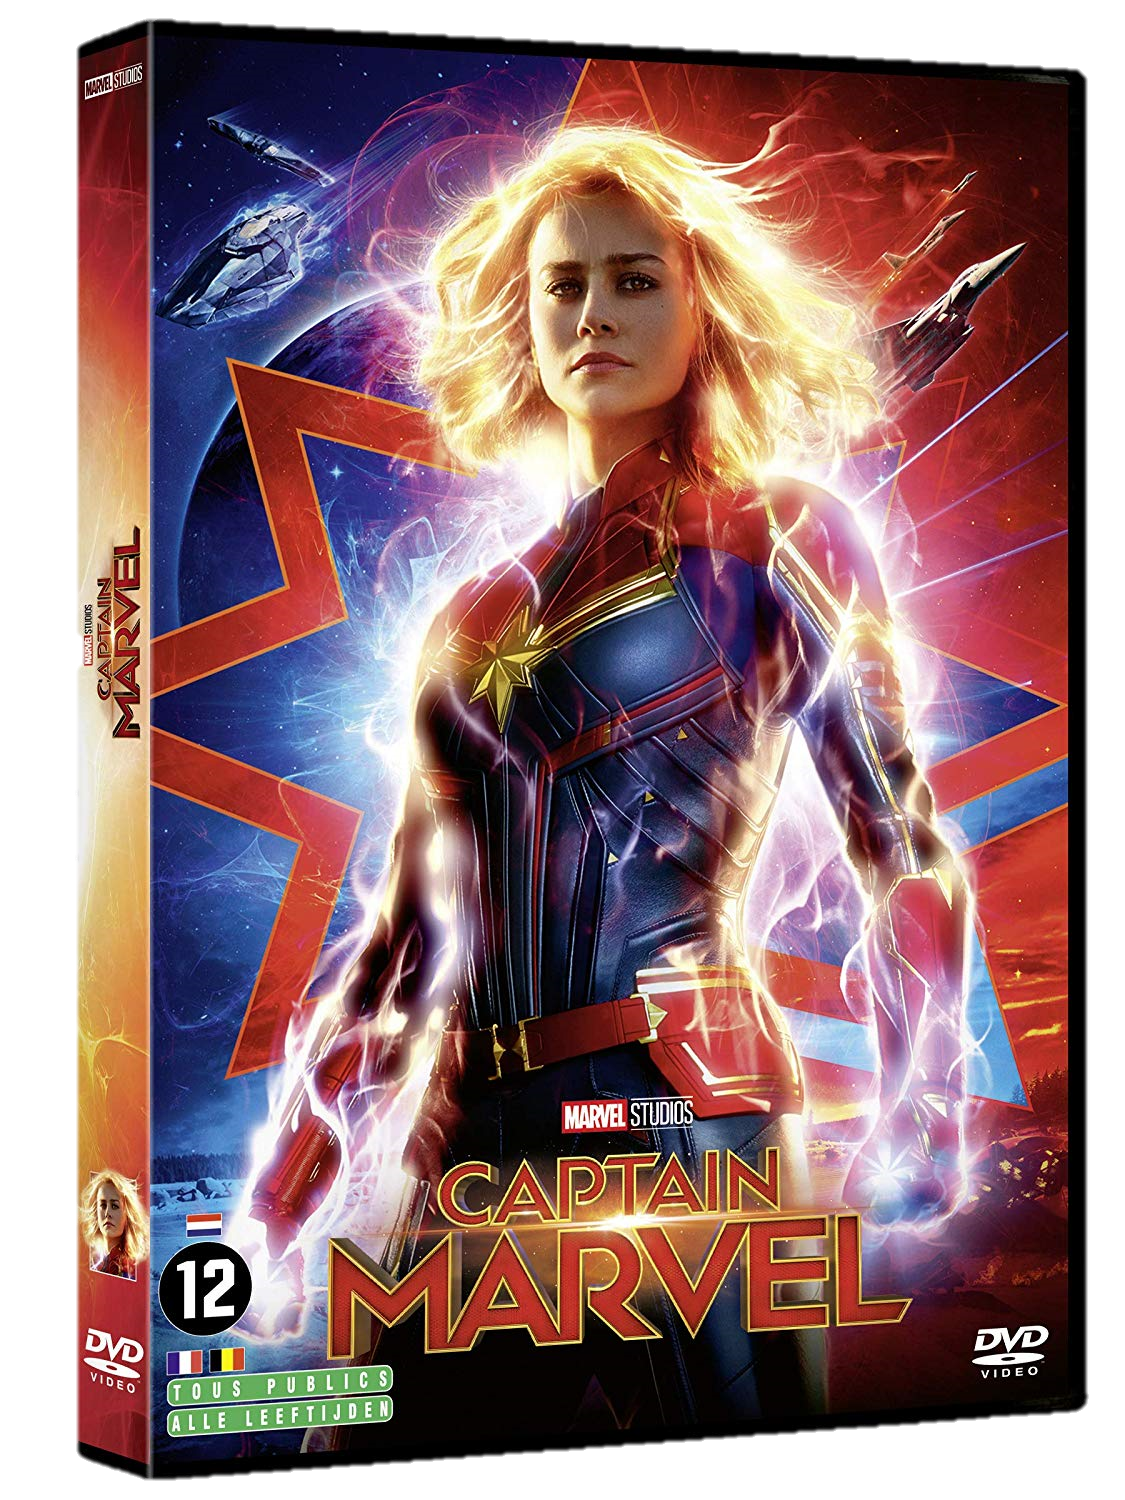 flashvideofilm - Captain Marvel " DVD à la location " - Location